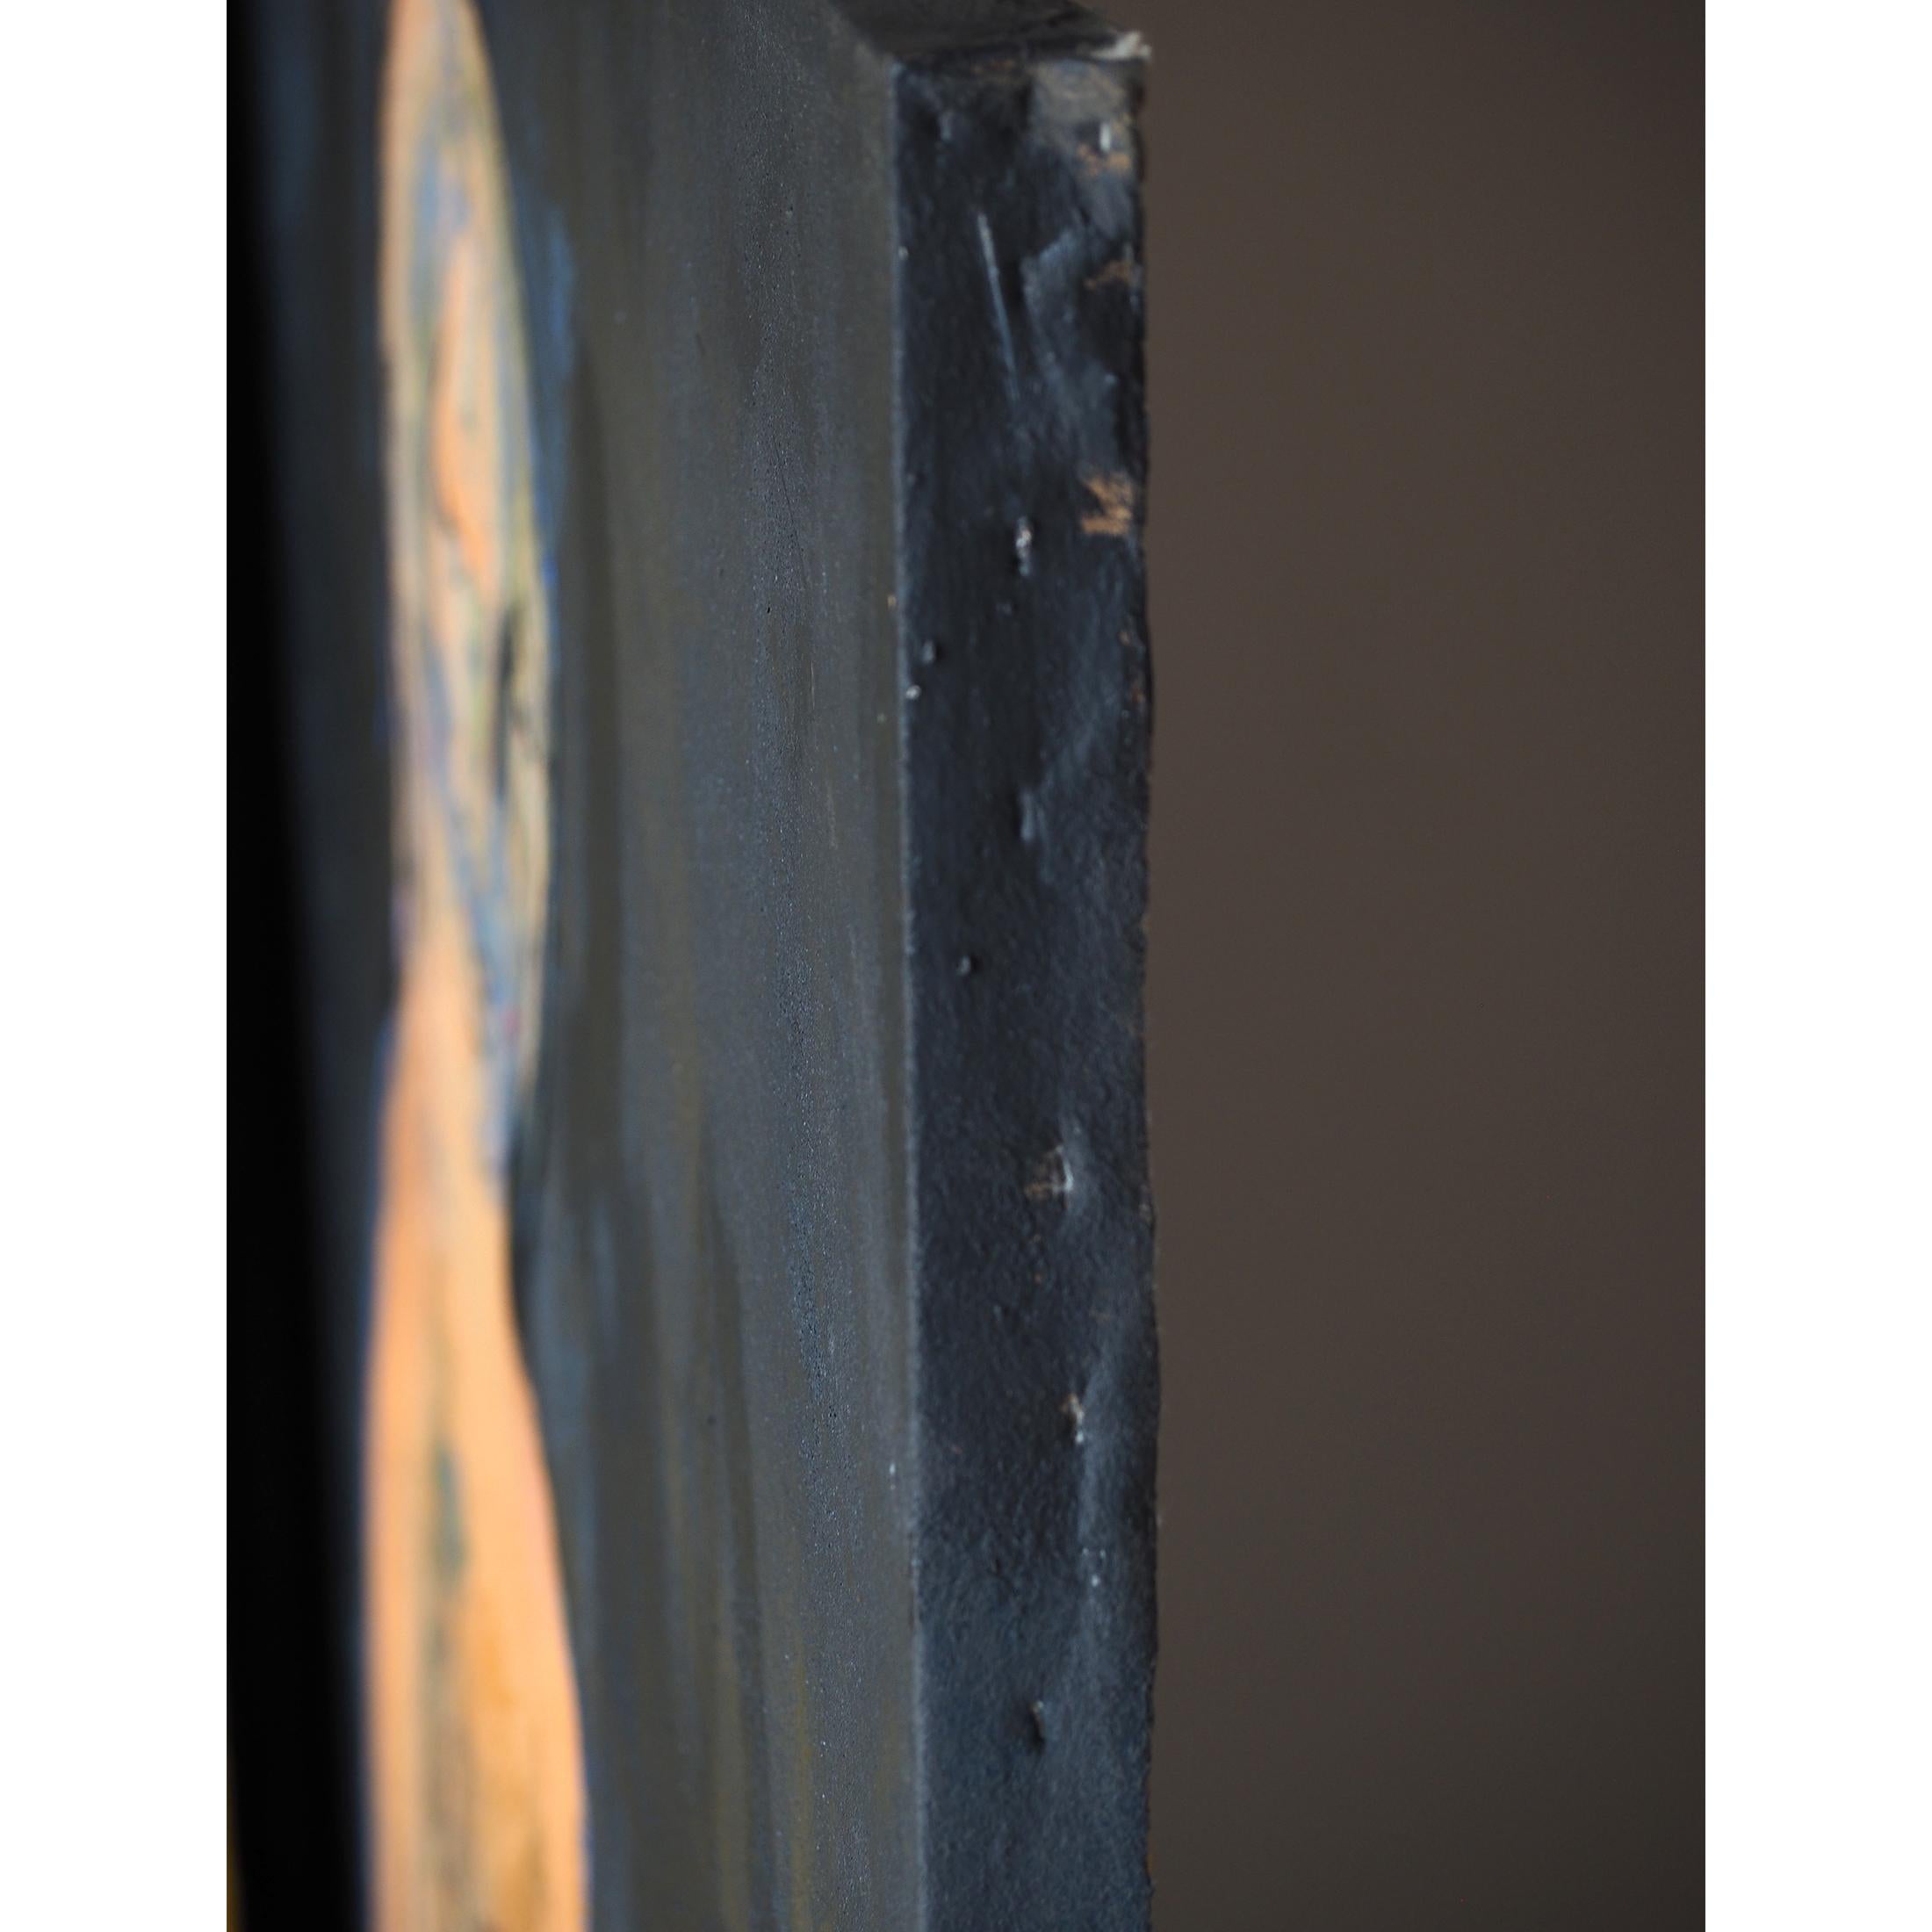 Francky Criquet - NOT TITLE /deep gray - oil on canvas - 80x133cm For Sale 3